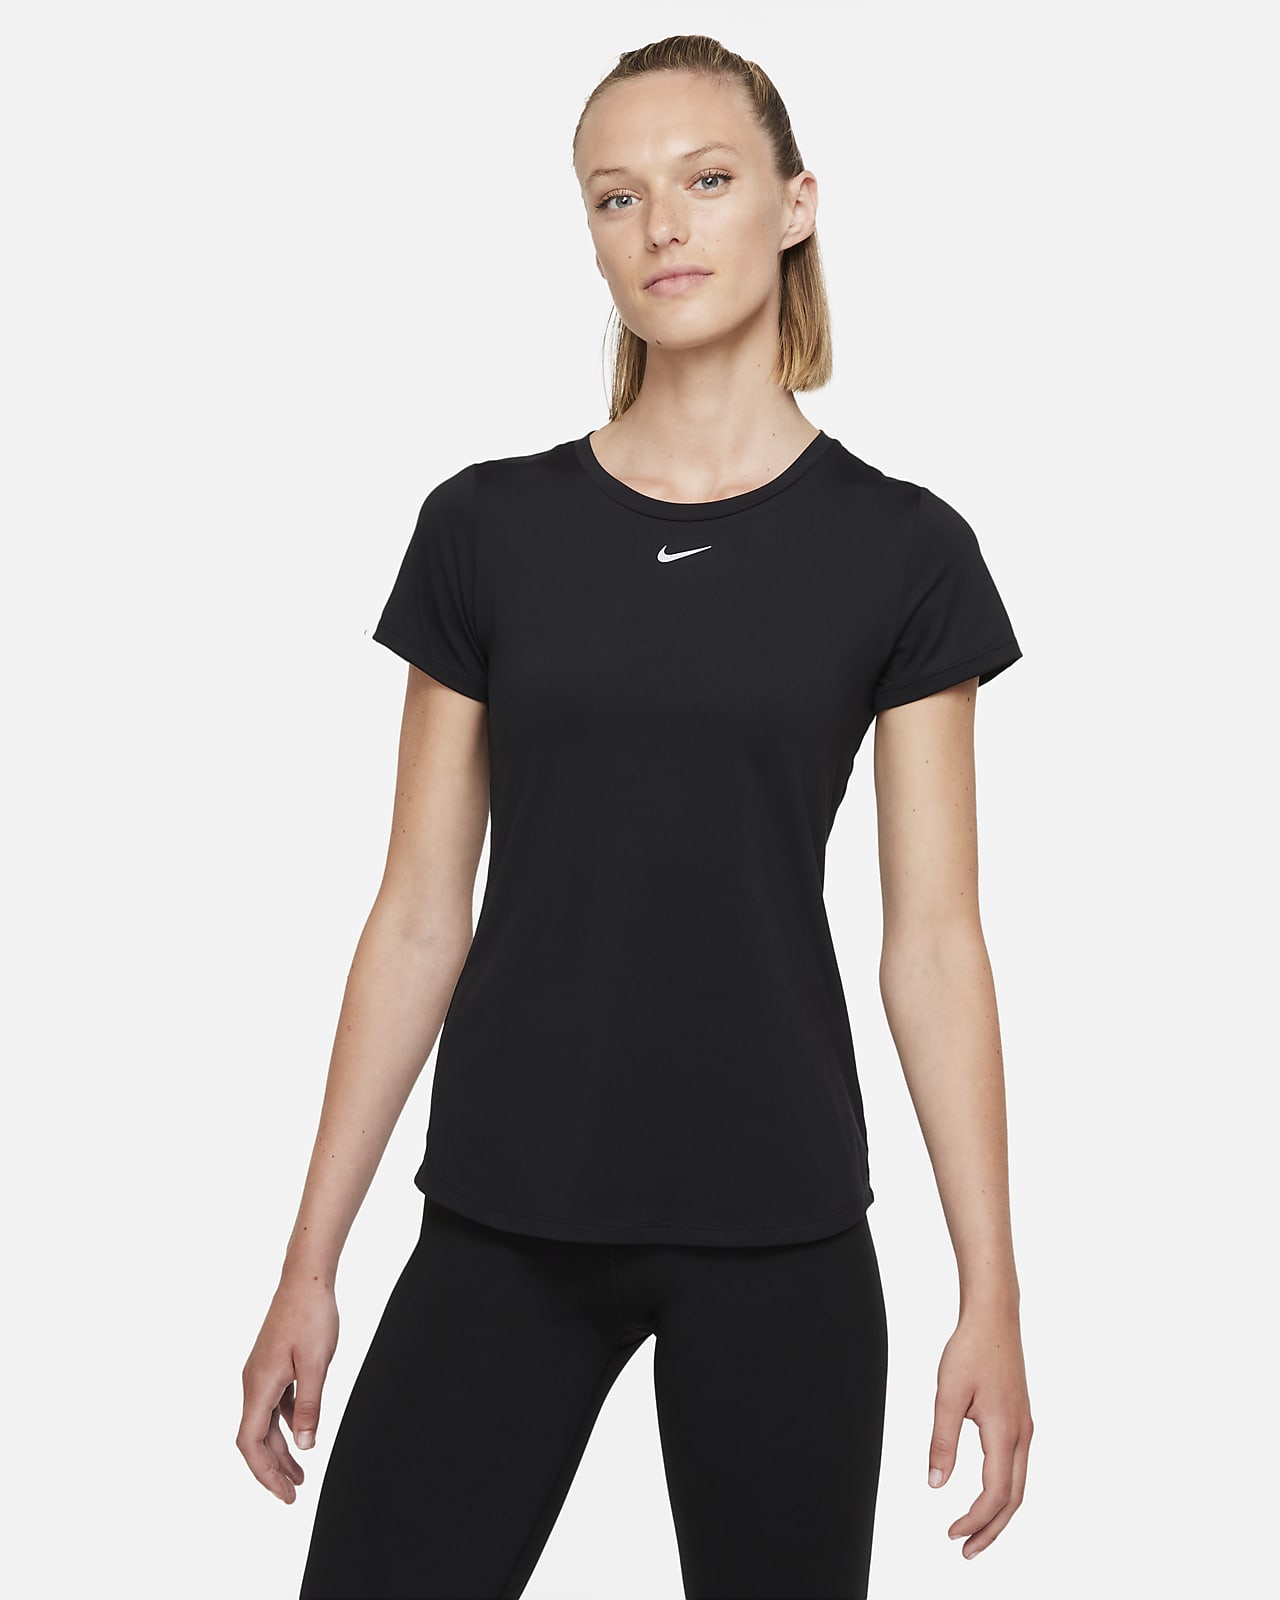 Nike Dri-FIT One Luxe Women's Slim Fit Short-Sleeve Top. Nike.com